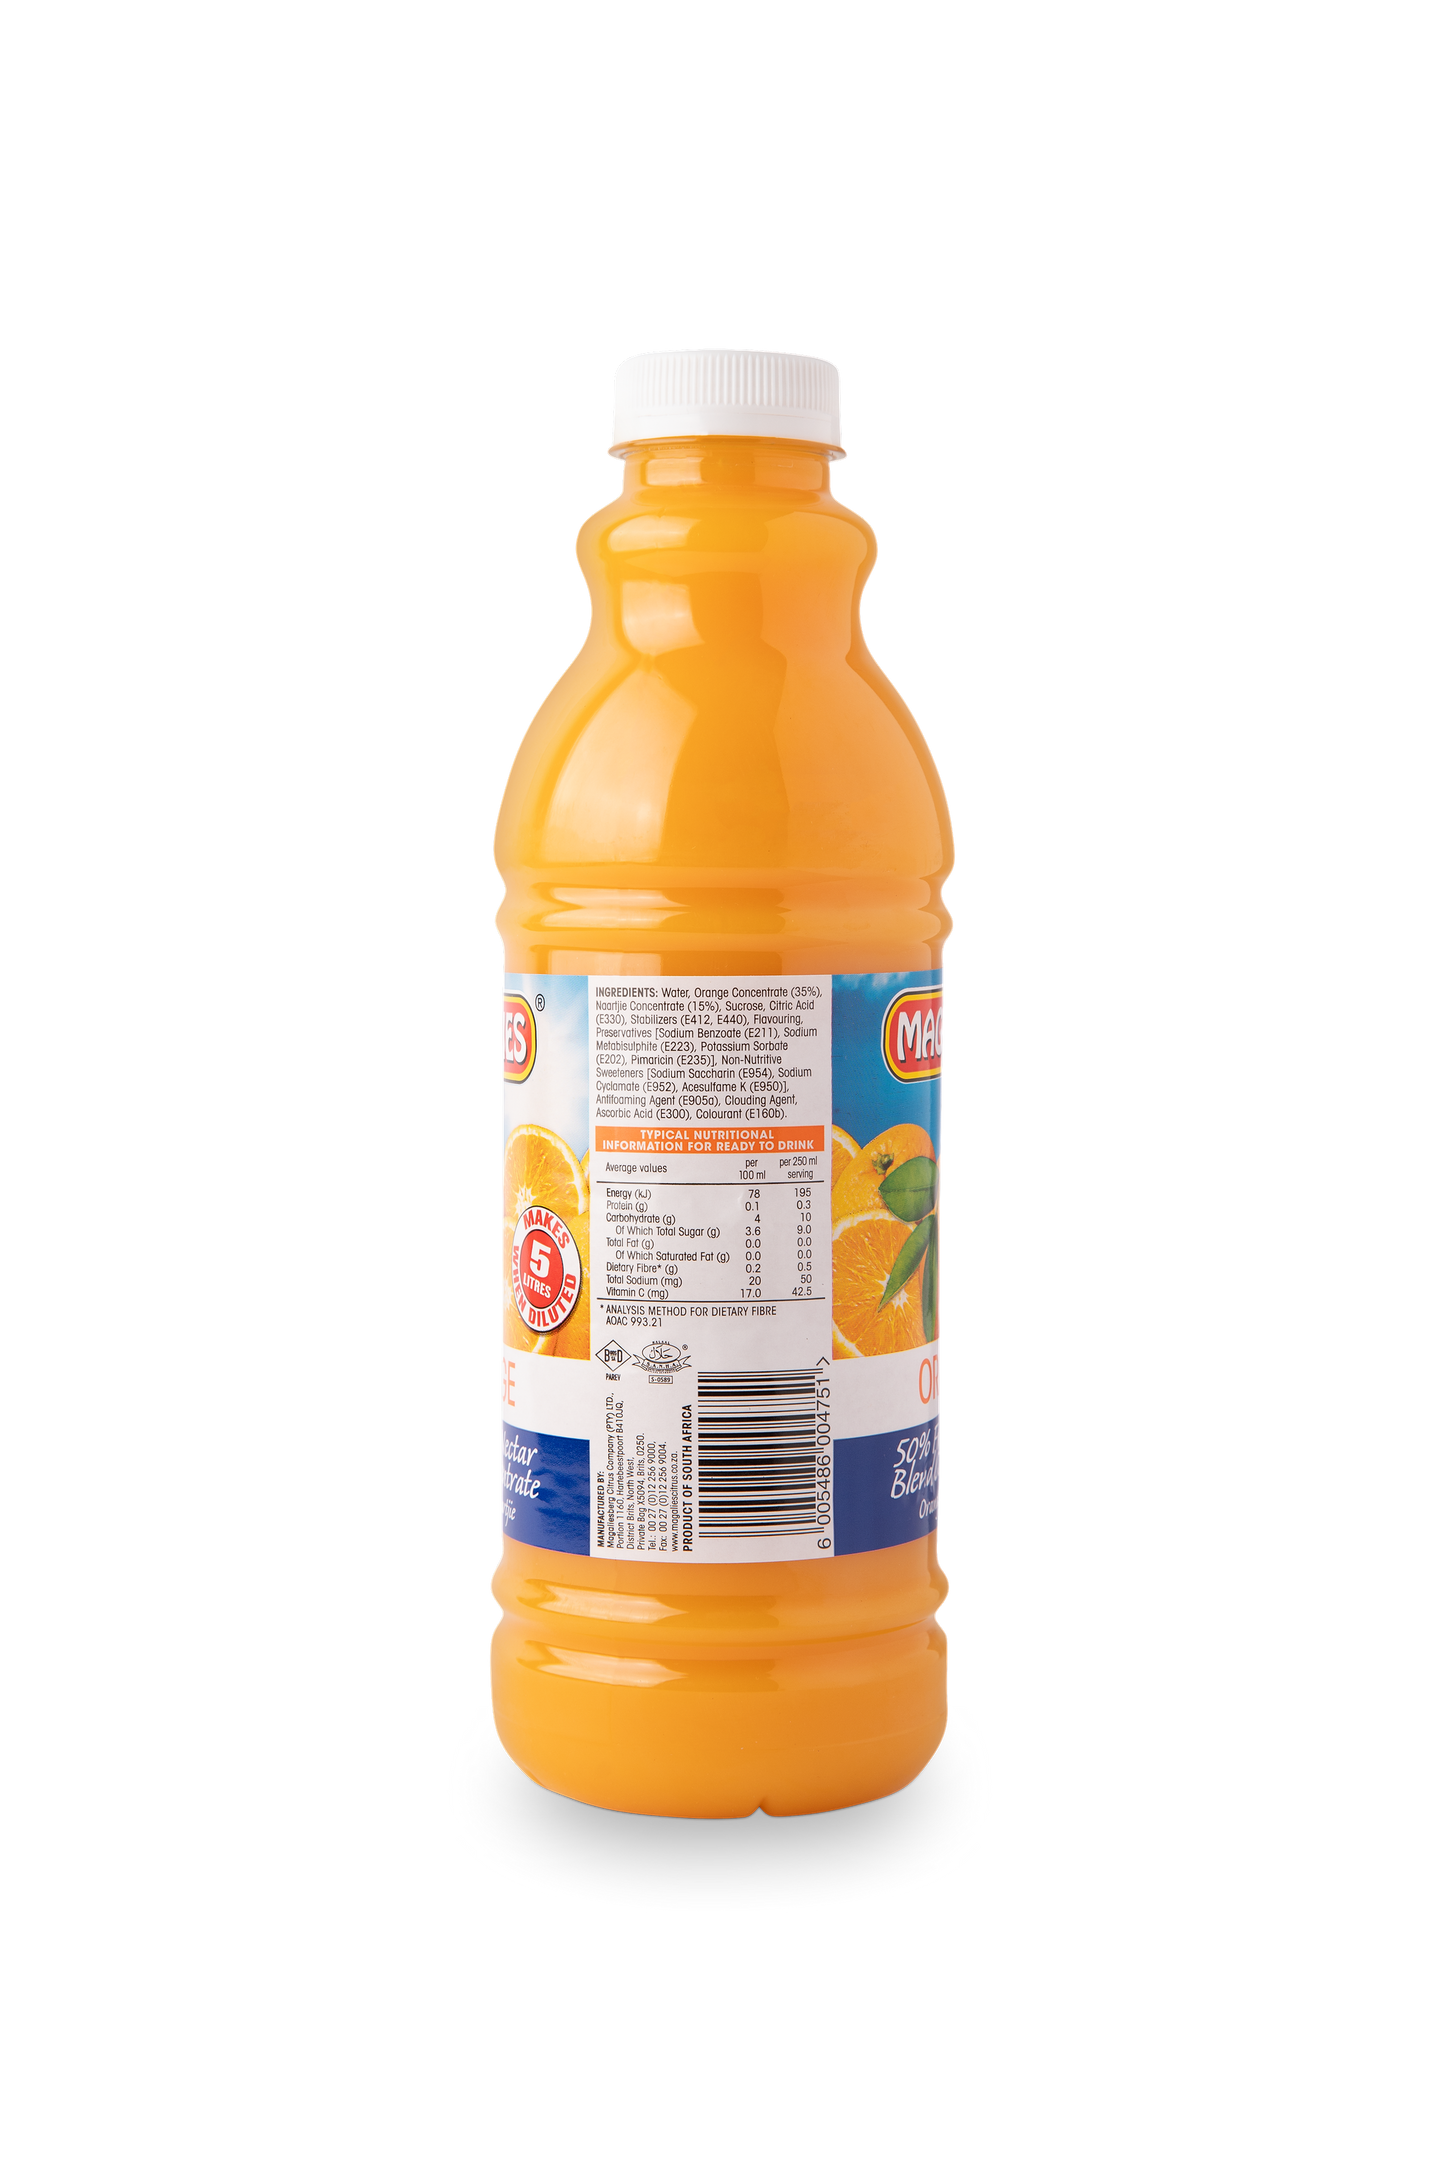 Magalies 1 litre Orange 50% 1+4 fruit nectar concentrate